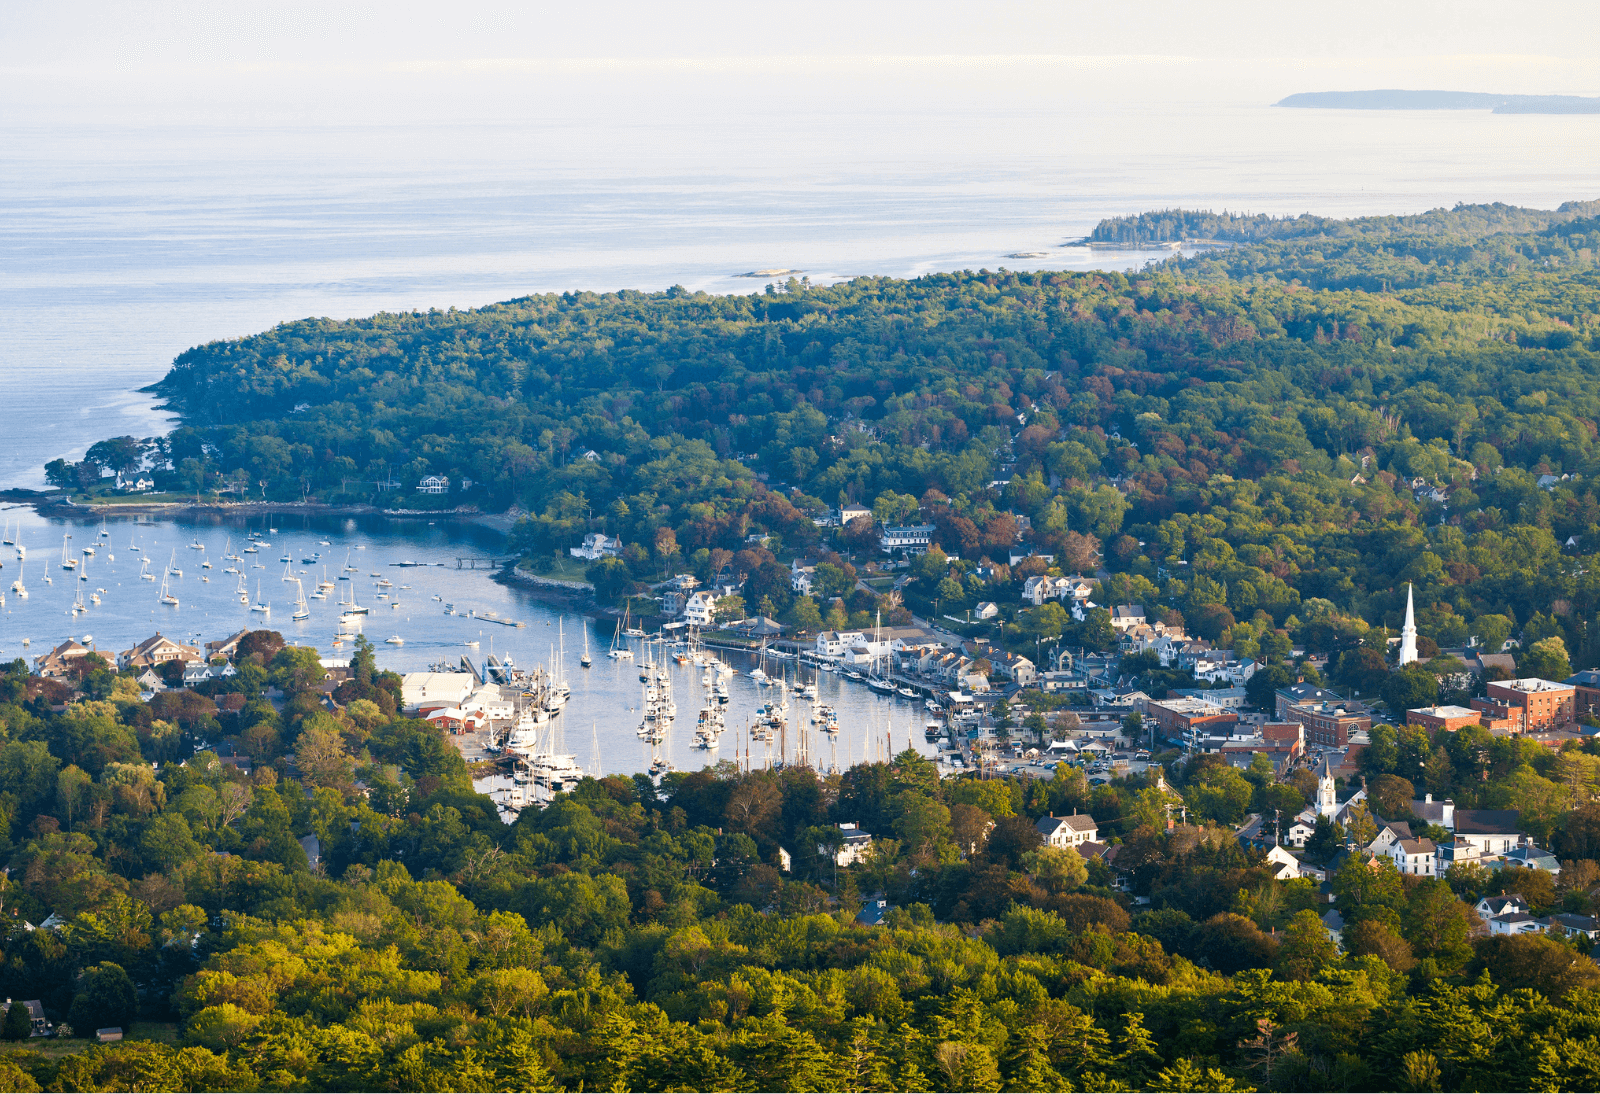 A view of the Maine coastline